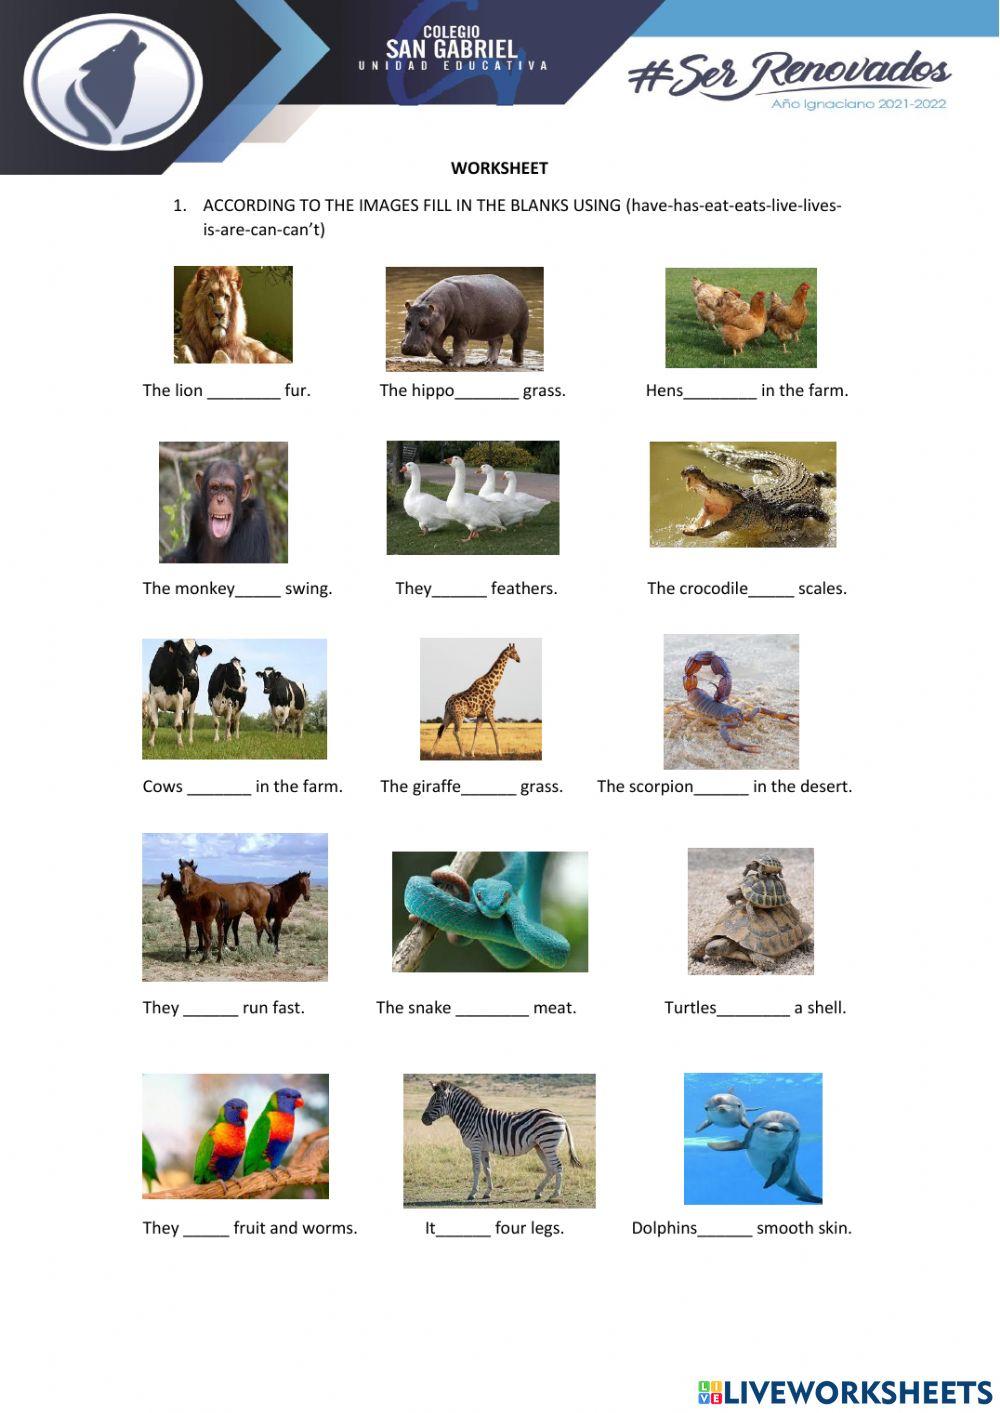 Characteristics of animals